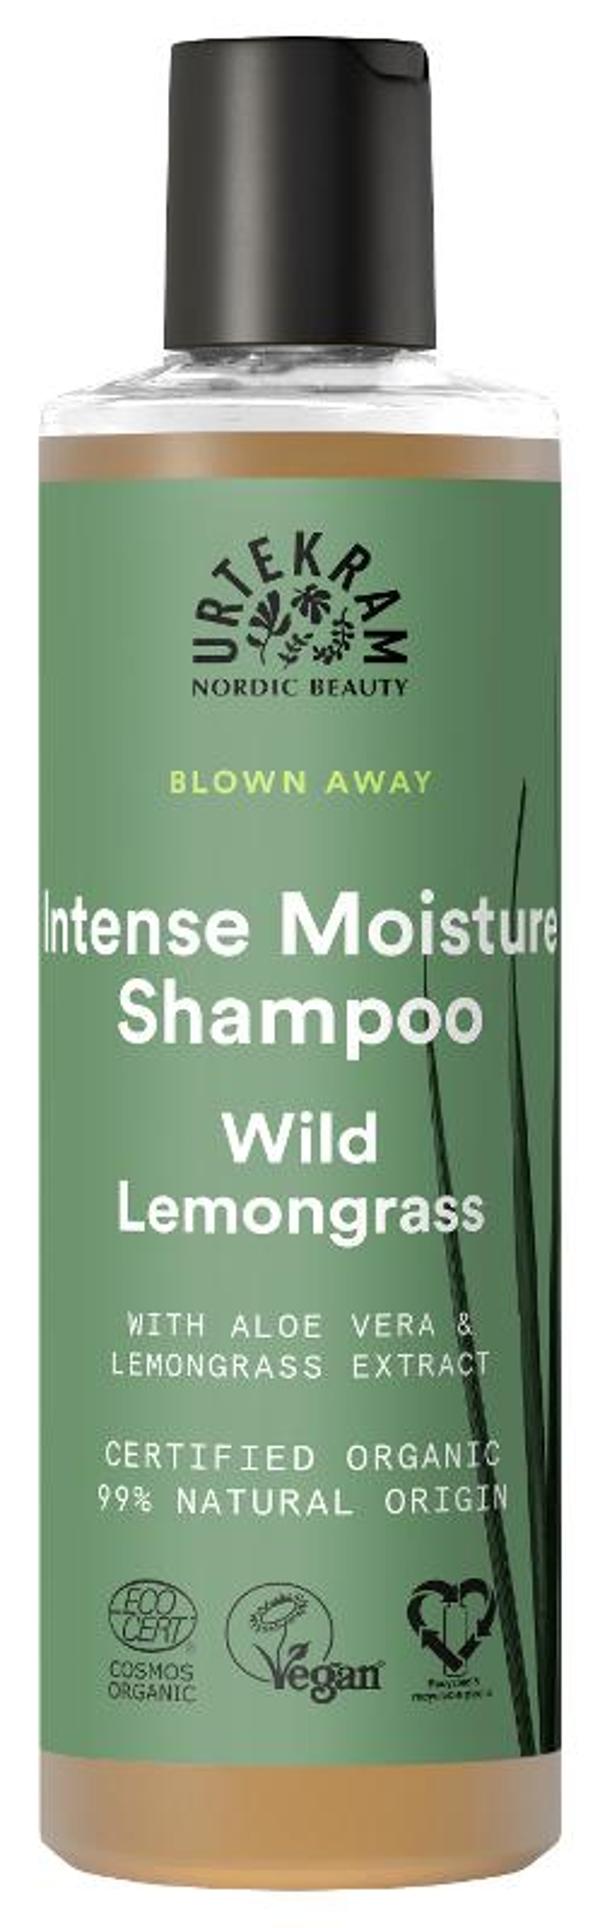 Produktfoto zu Shampoo Wild Lemongrass